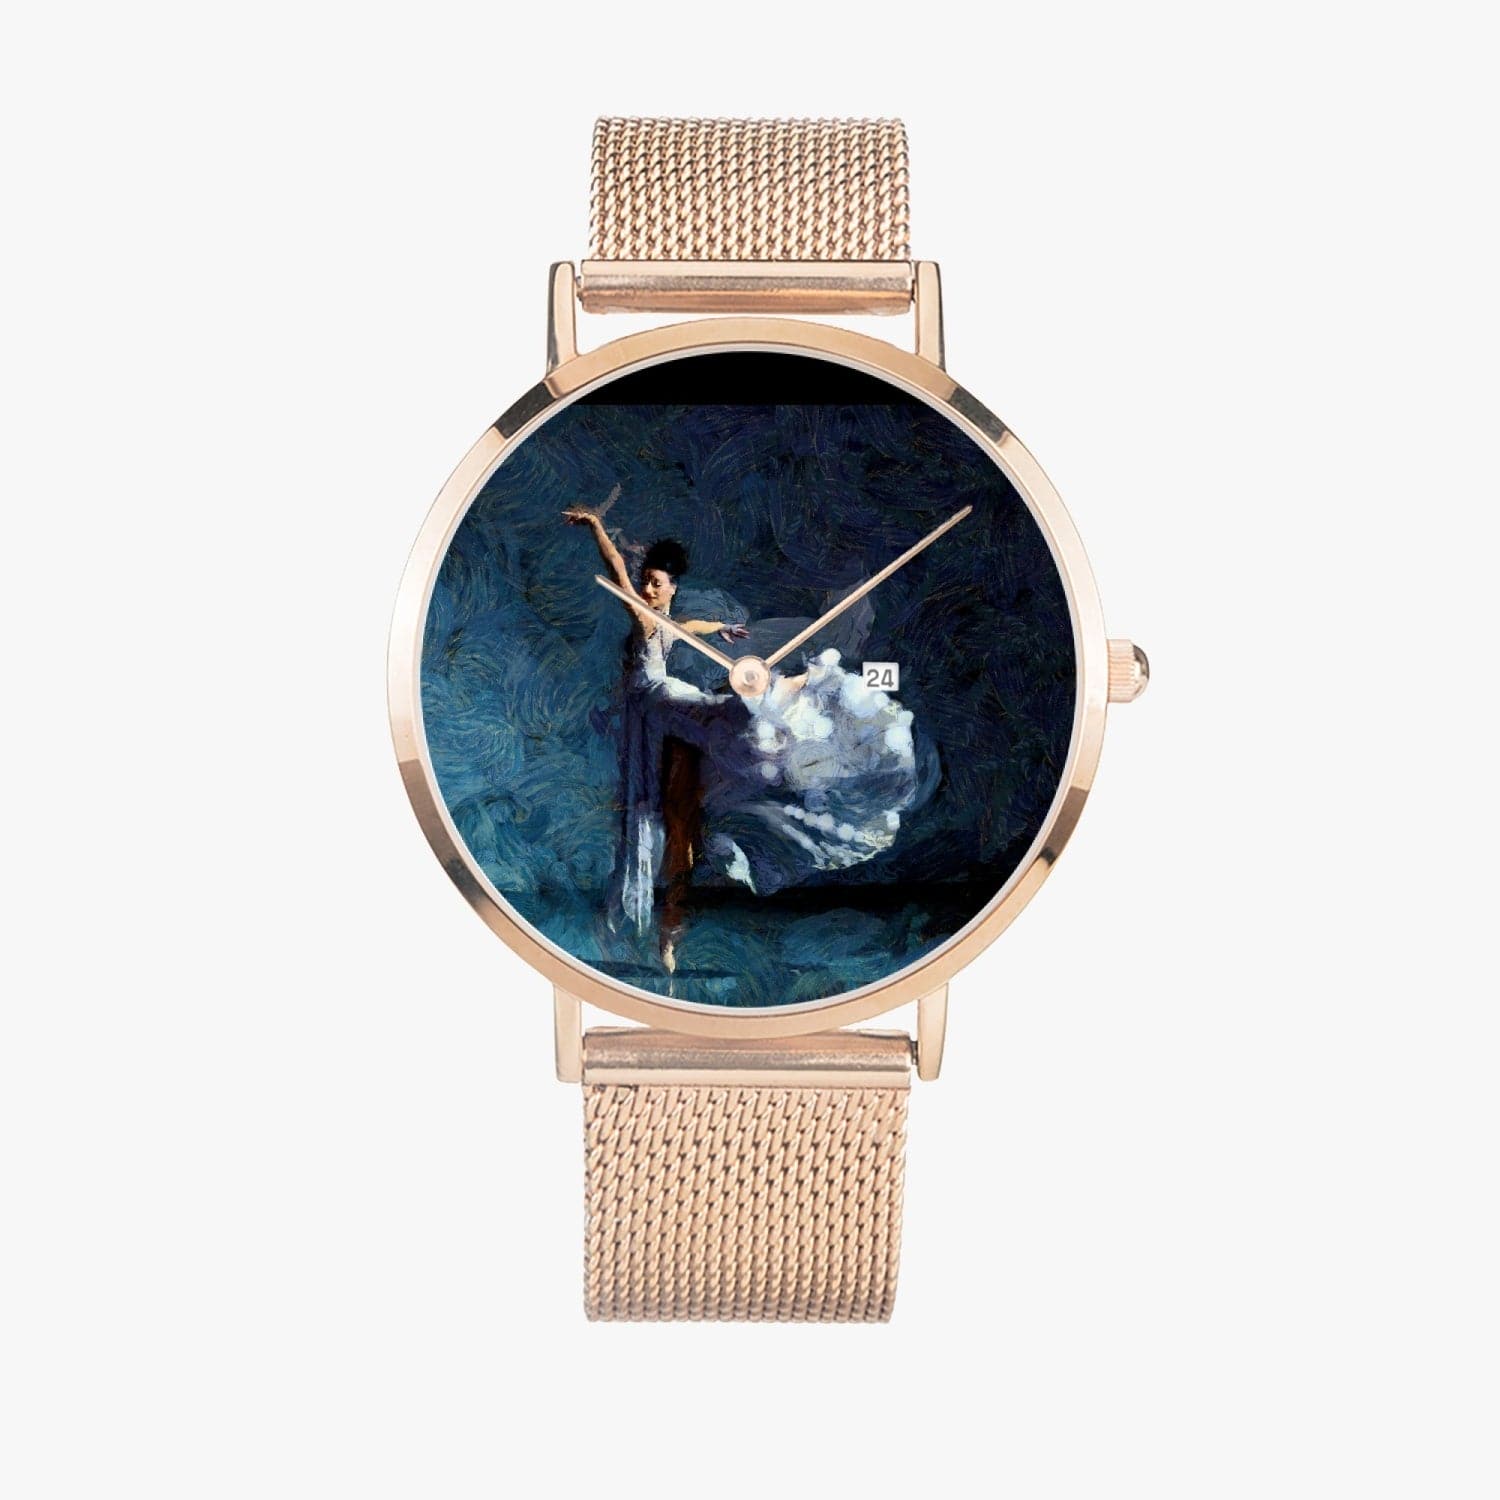 'Ballerina in white Dress' Stainless Steel Perpetual Calendar Quartz Watch by Sensus Studio